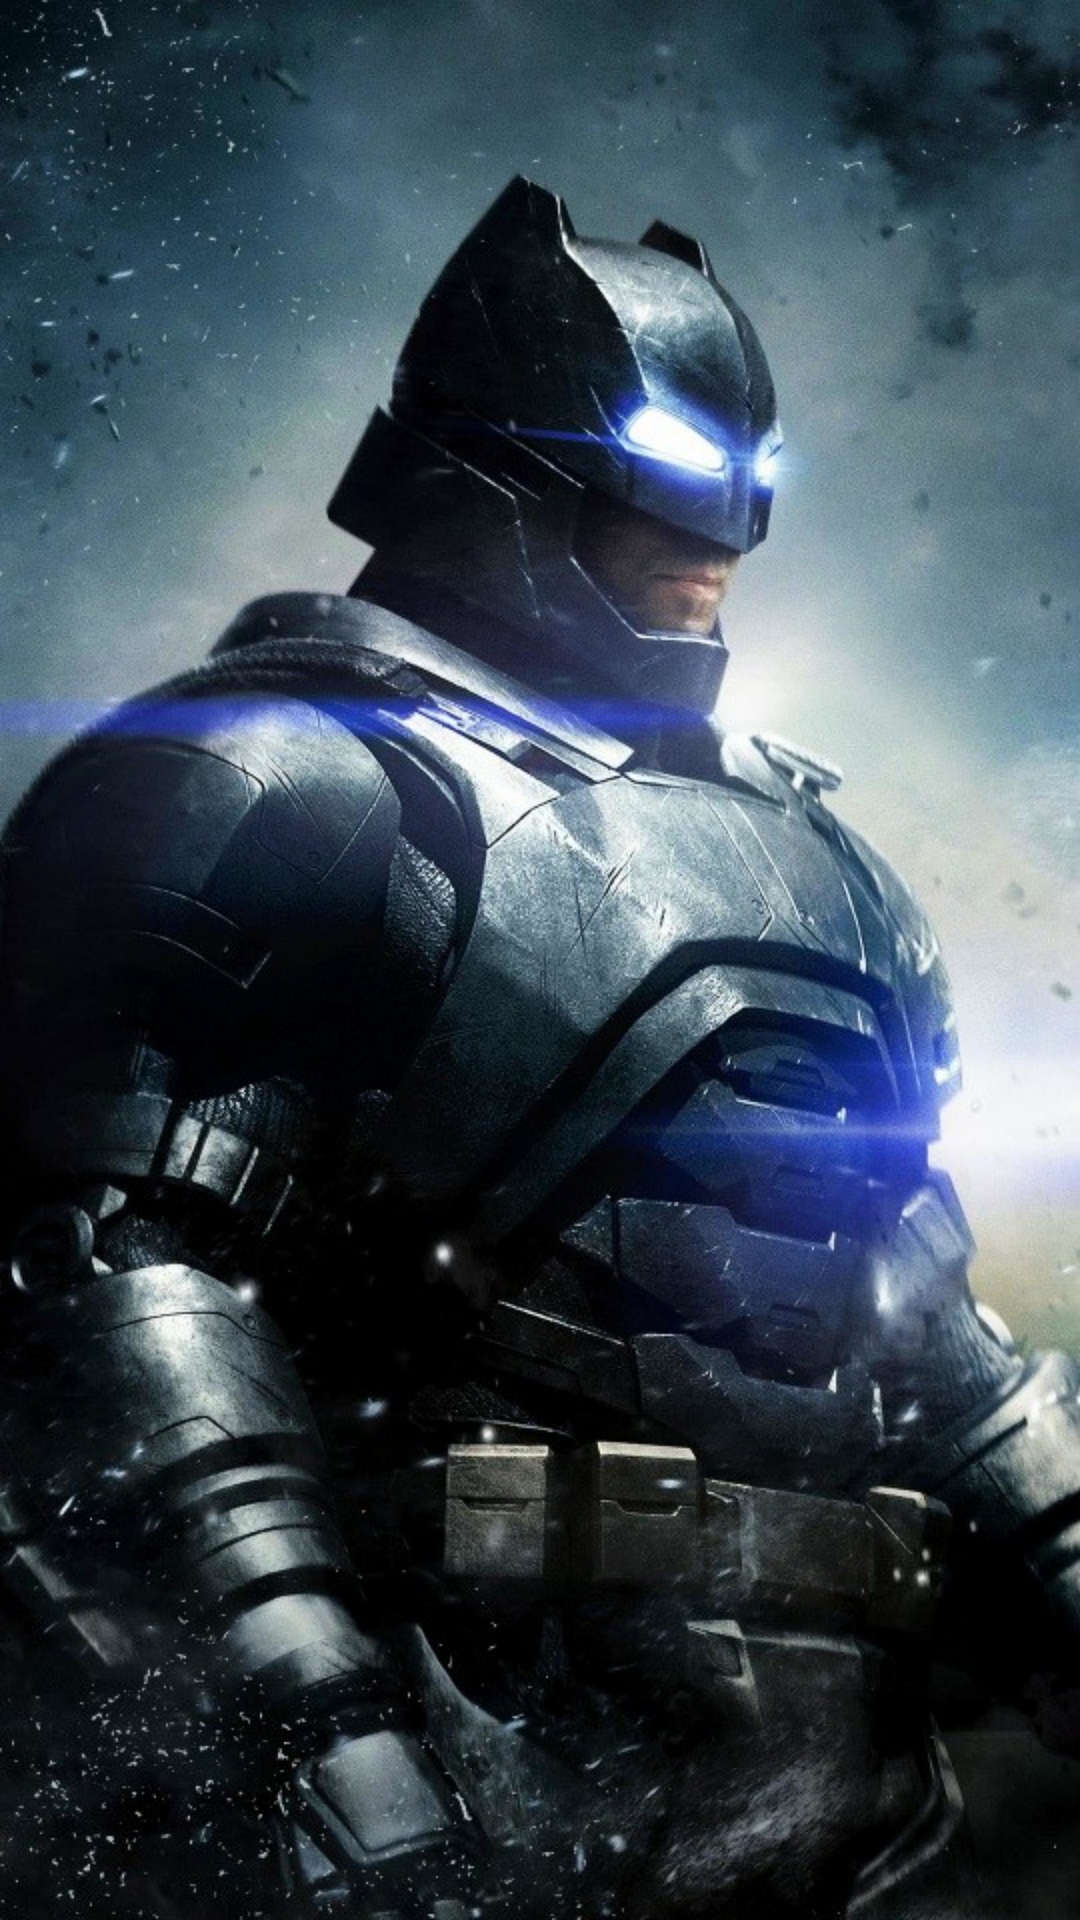 Descarga gratuita de fondo de pantalla para móvil de Superhombre, Películas, Hombre Murciélago, Ben Affleck, Batman V Superman: El Amanecer De La Justicia.